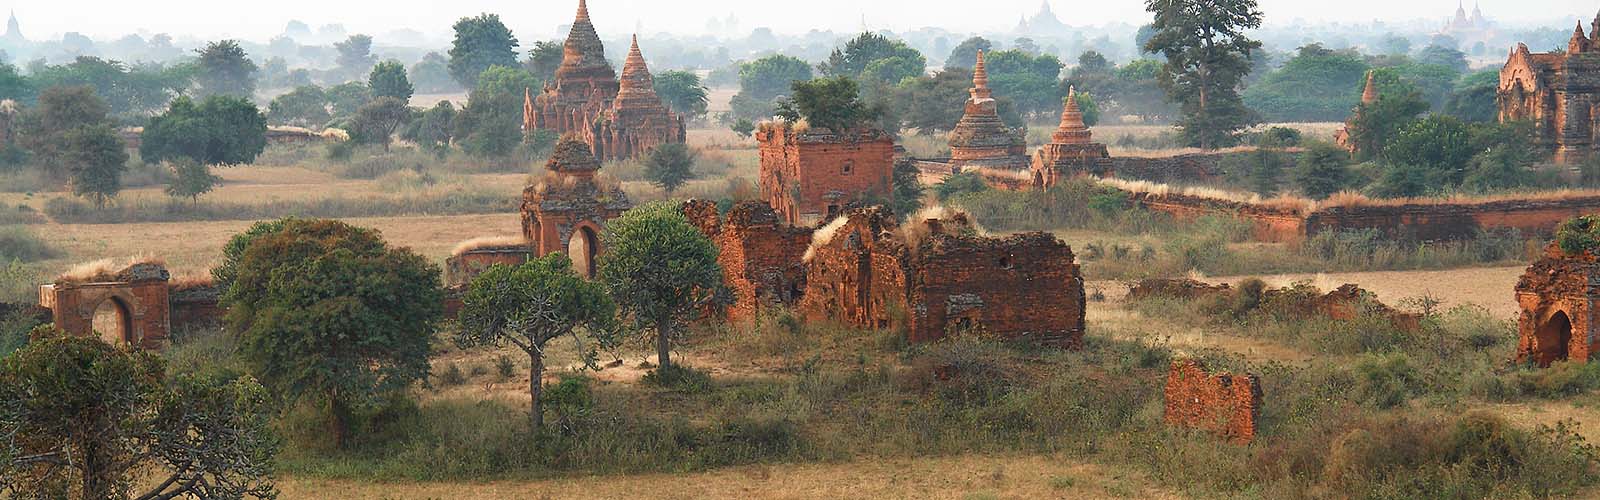 Myanmar Travel | Myanmar Tours |Myanmar Private tours | ilotustours